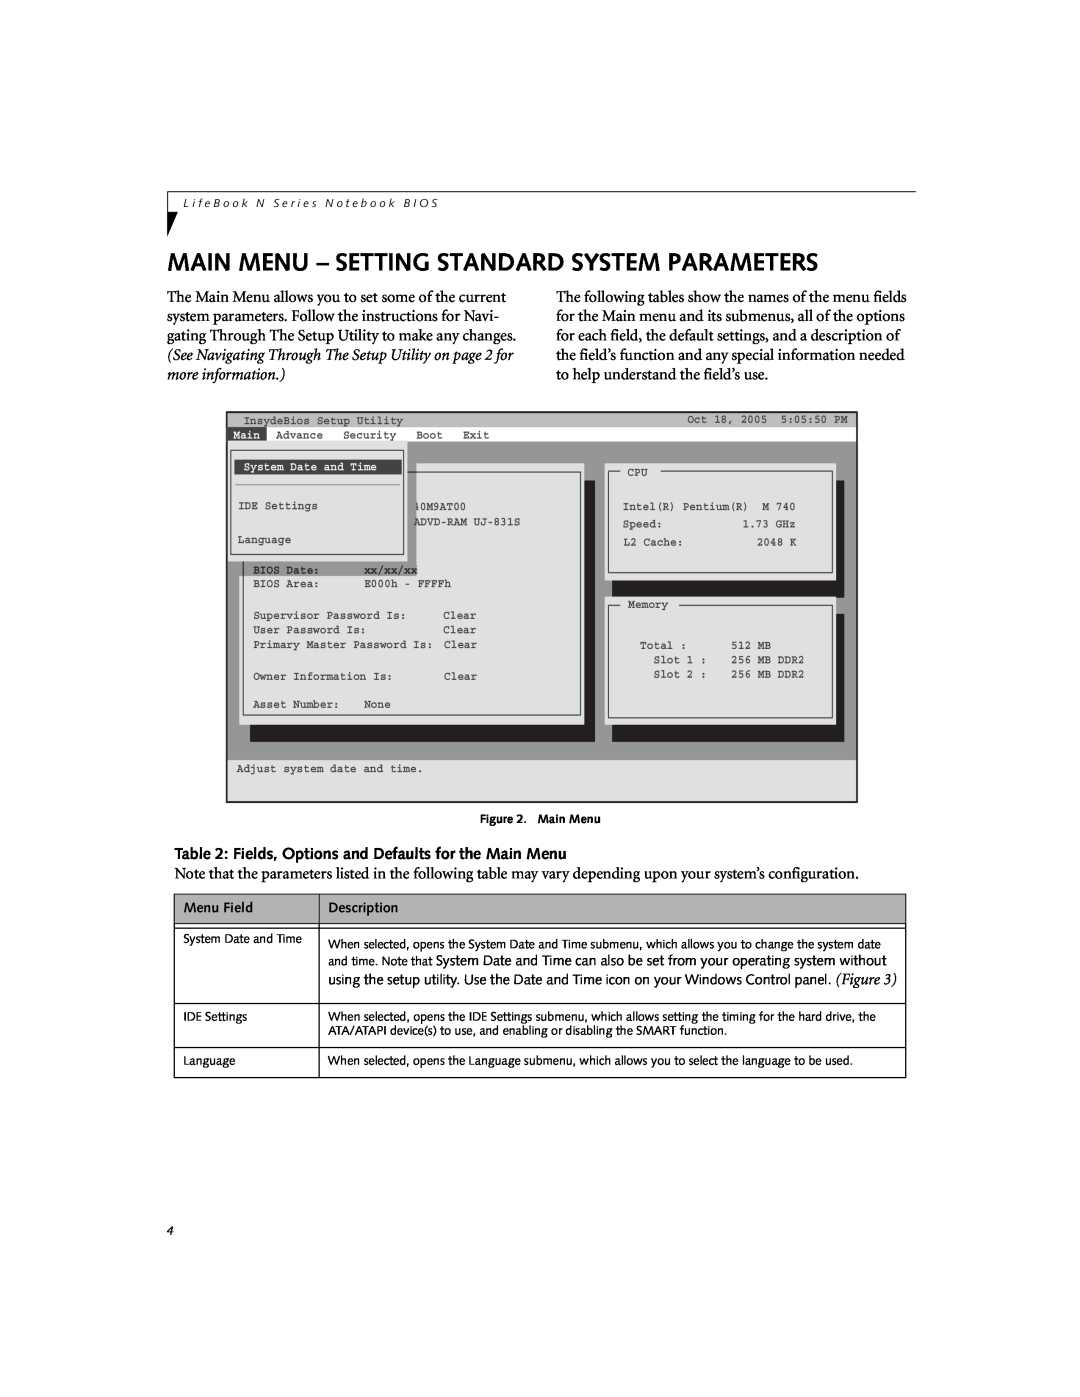 Fujitsu Siemens Computers N3520 manual Main Menu - Setting Standard System Parameters 